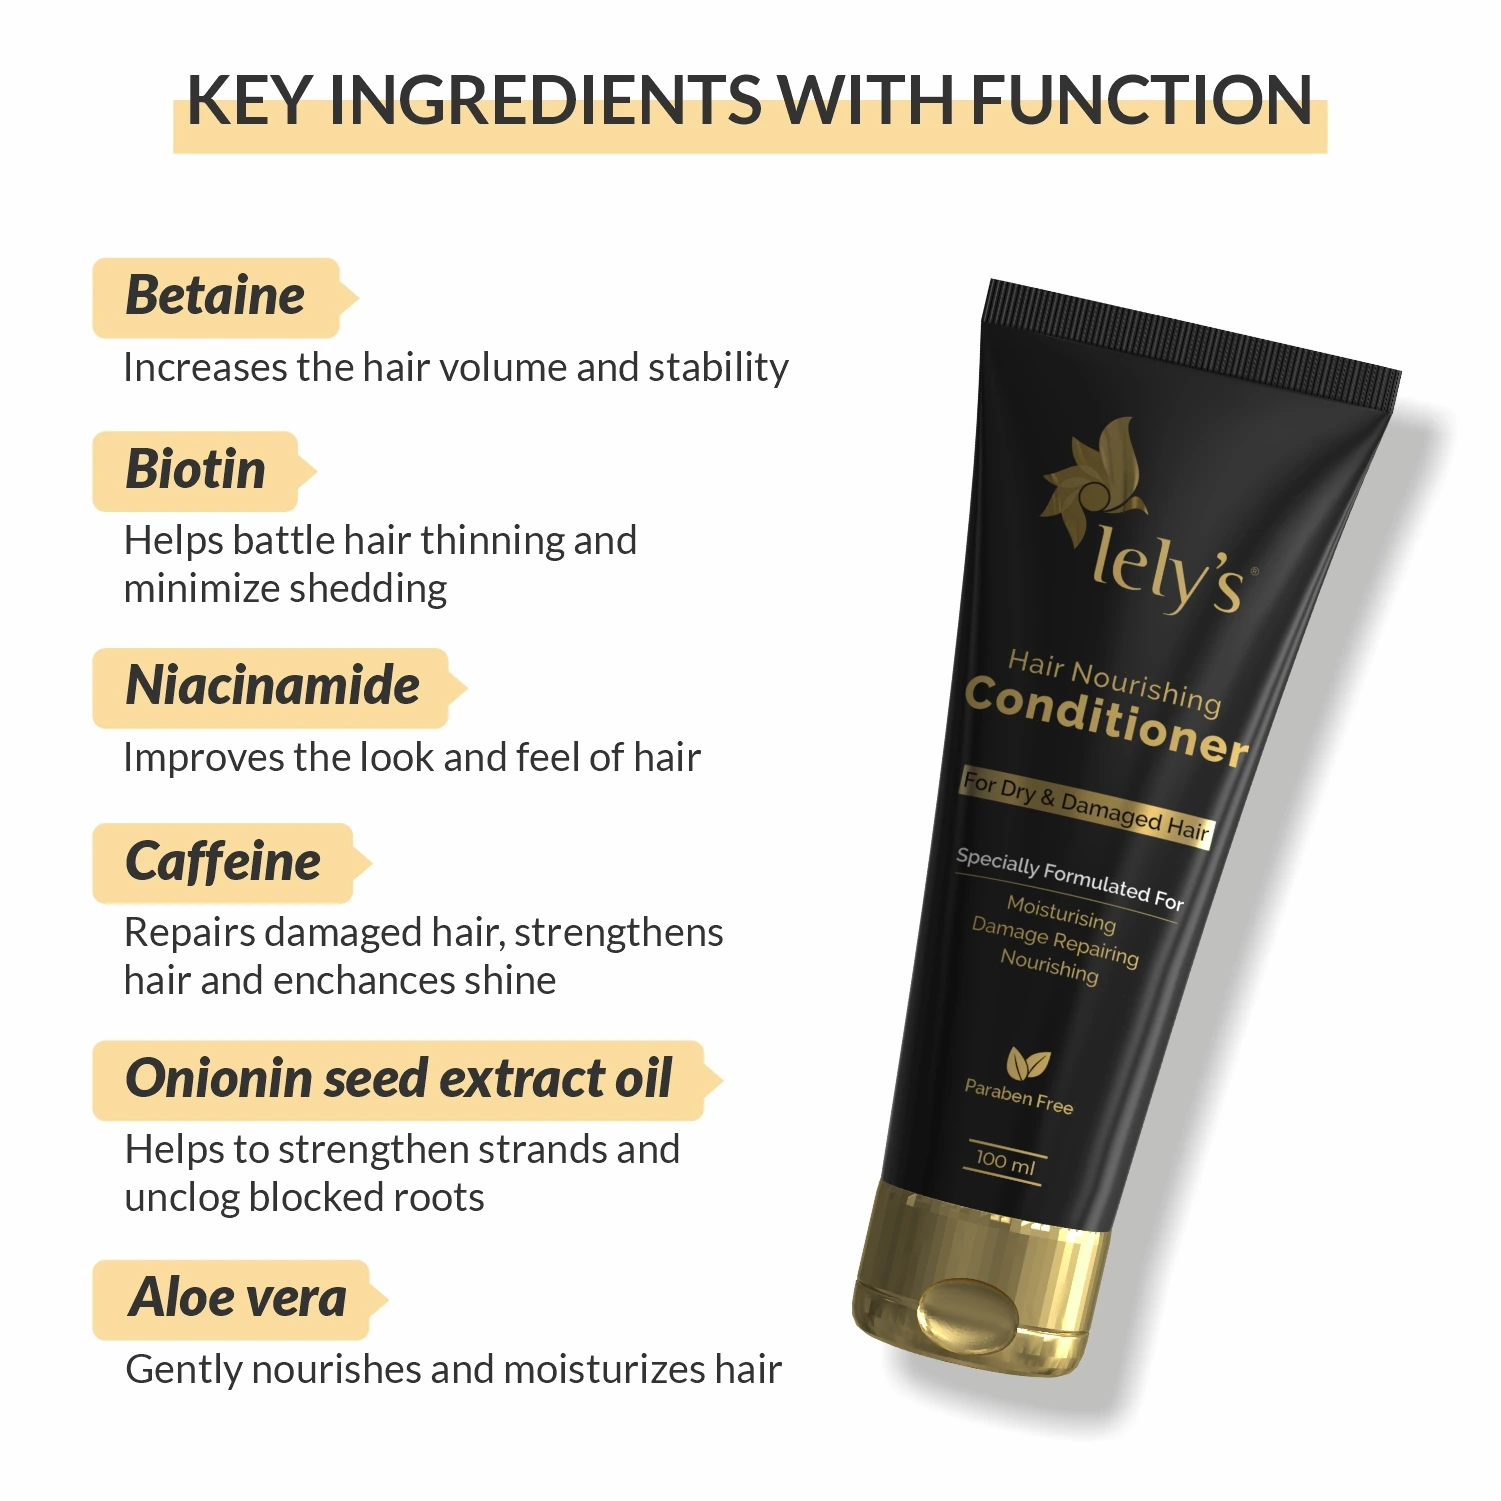 Hair Nourishing Conditioner Key Ingredients